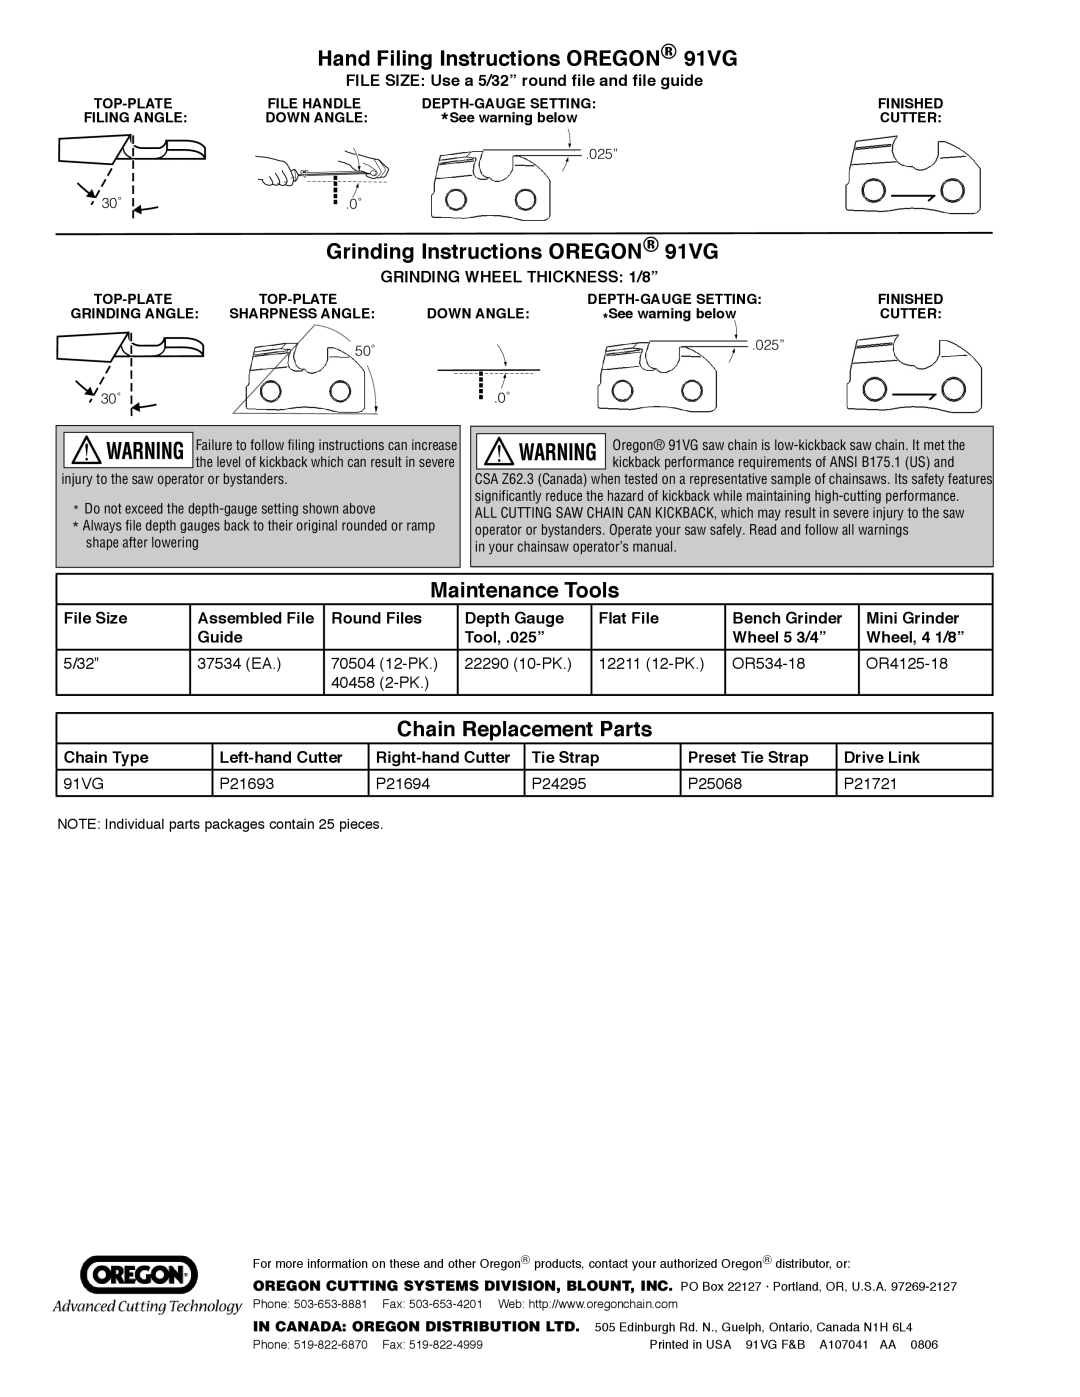 Oregon manual Hand Filing Instructions OREGON 91VG, Grinding Instructions OREGON 91VG, Maintenance Tools 